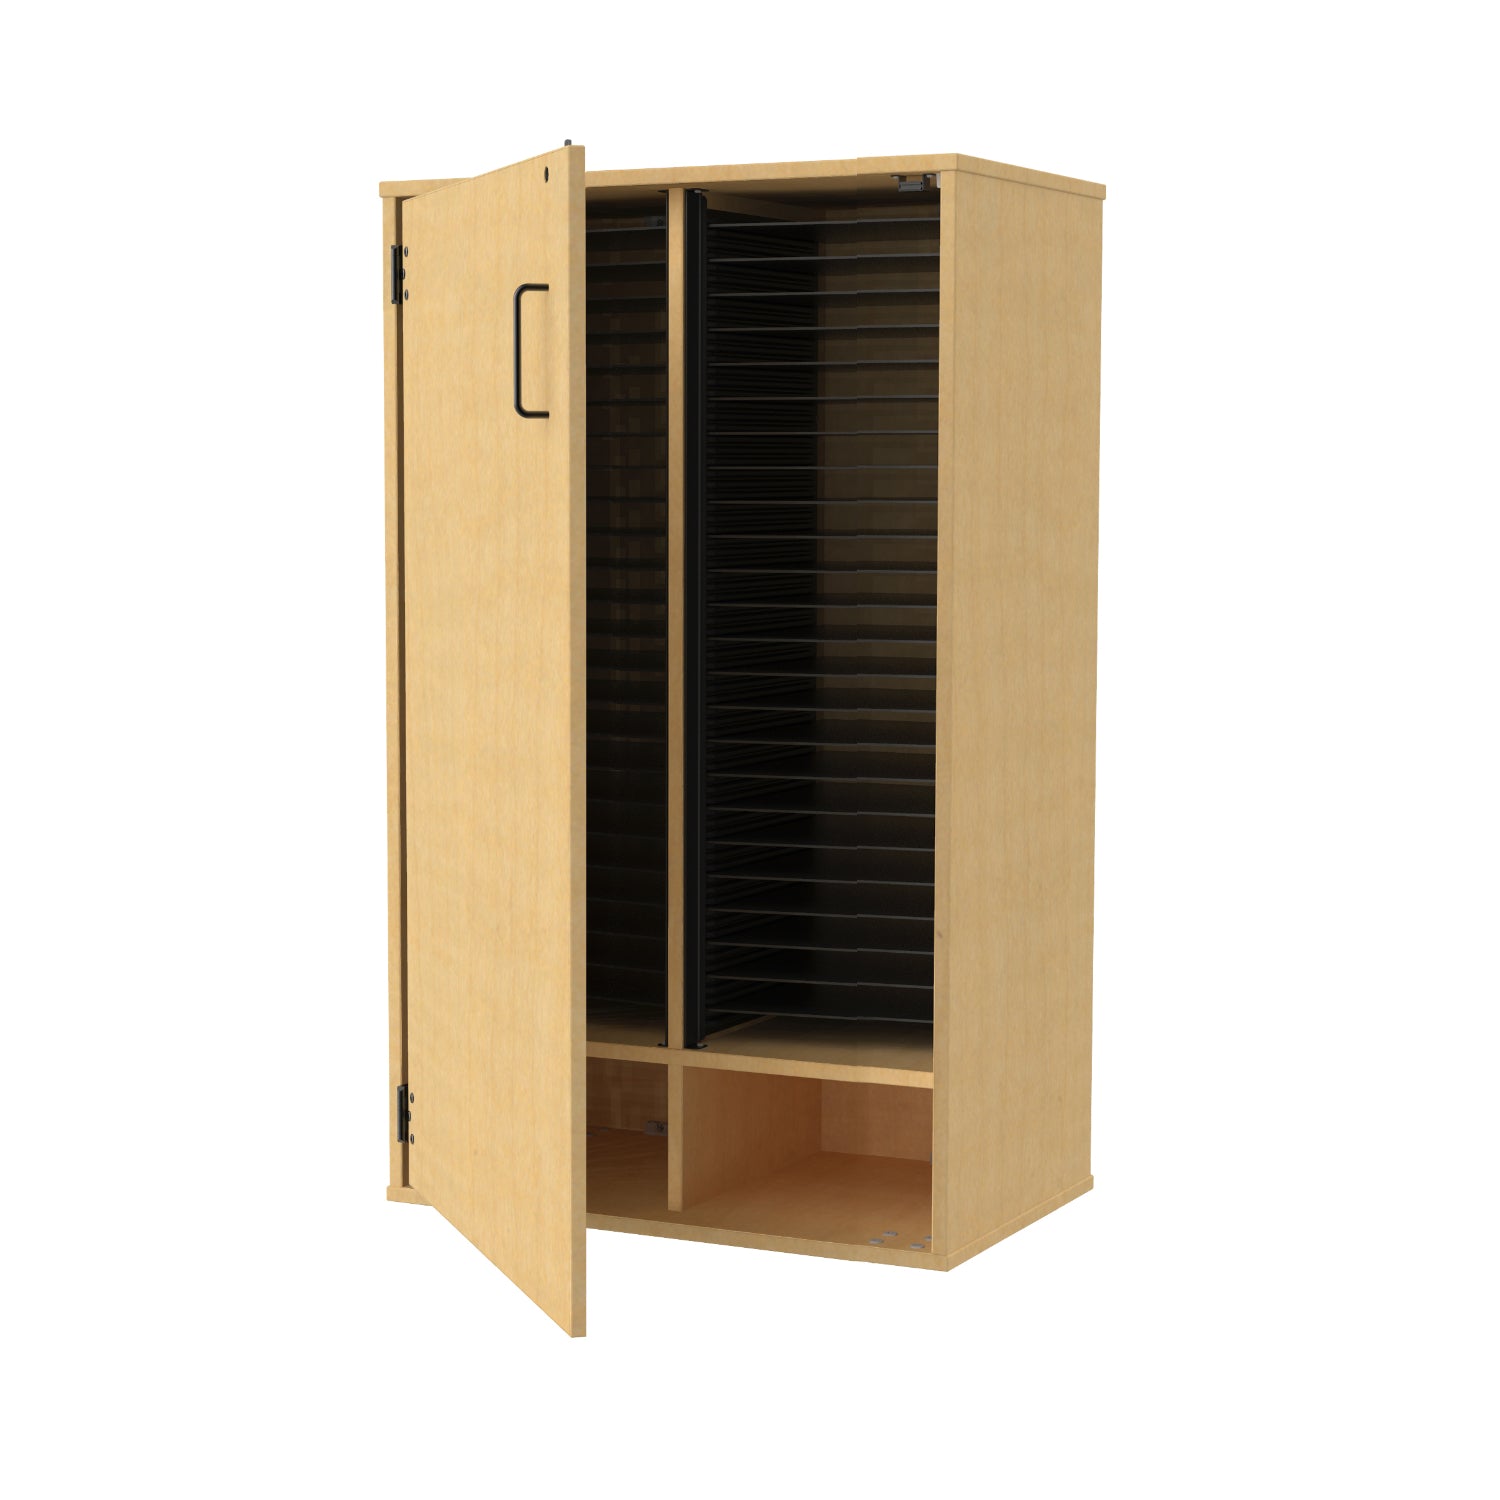 Bandstor™ 2 Compartment Choral Folio Cabinet, 52 Shelves, Locking Door